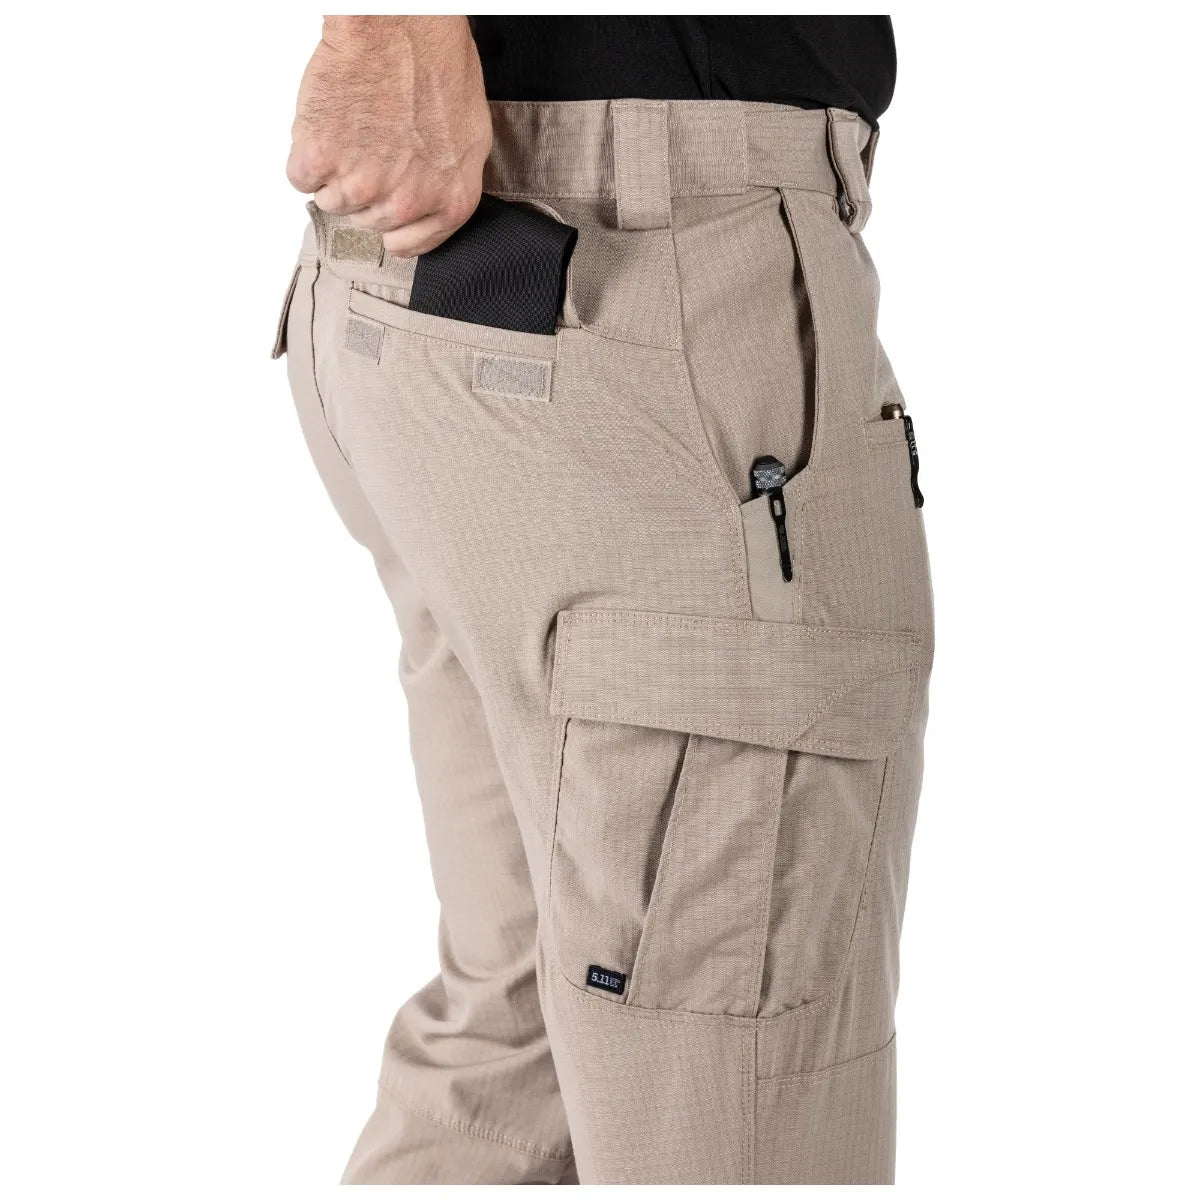 5.11 Pants: Men's Black 74369 019 Tactical Stryke Stretch Pants